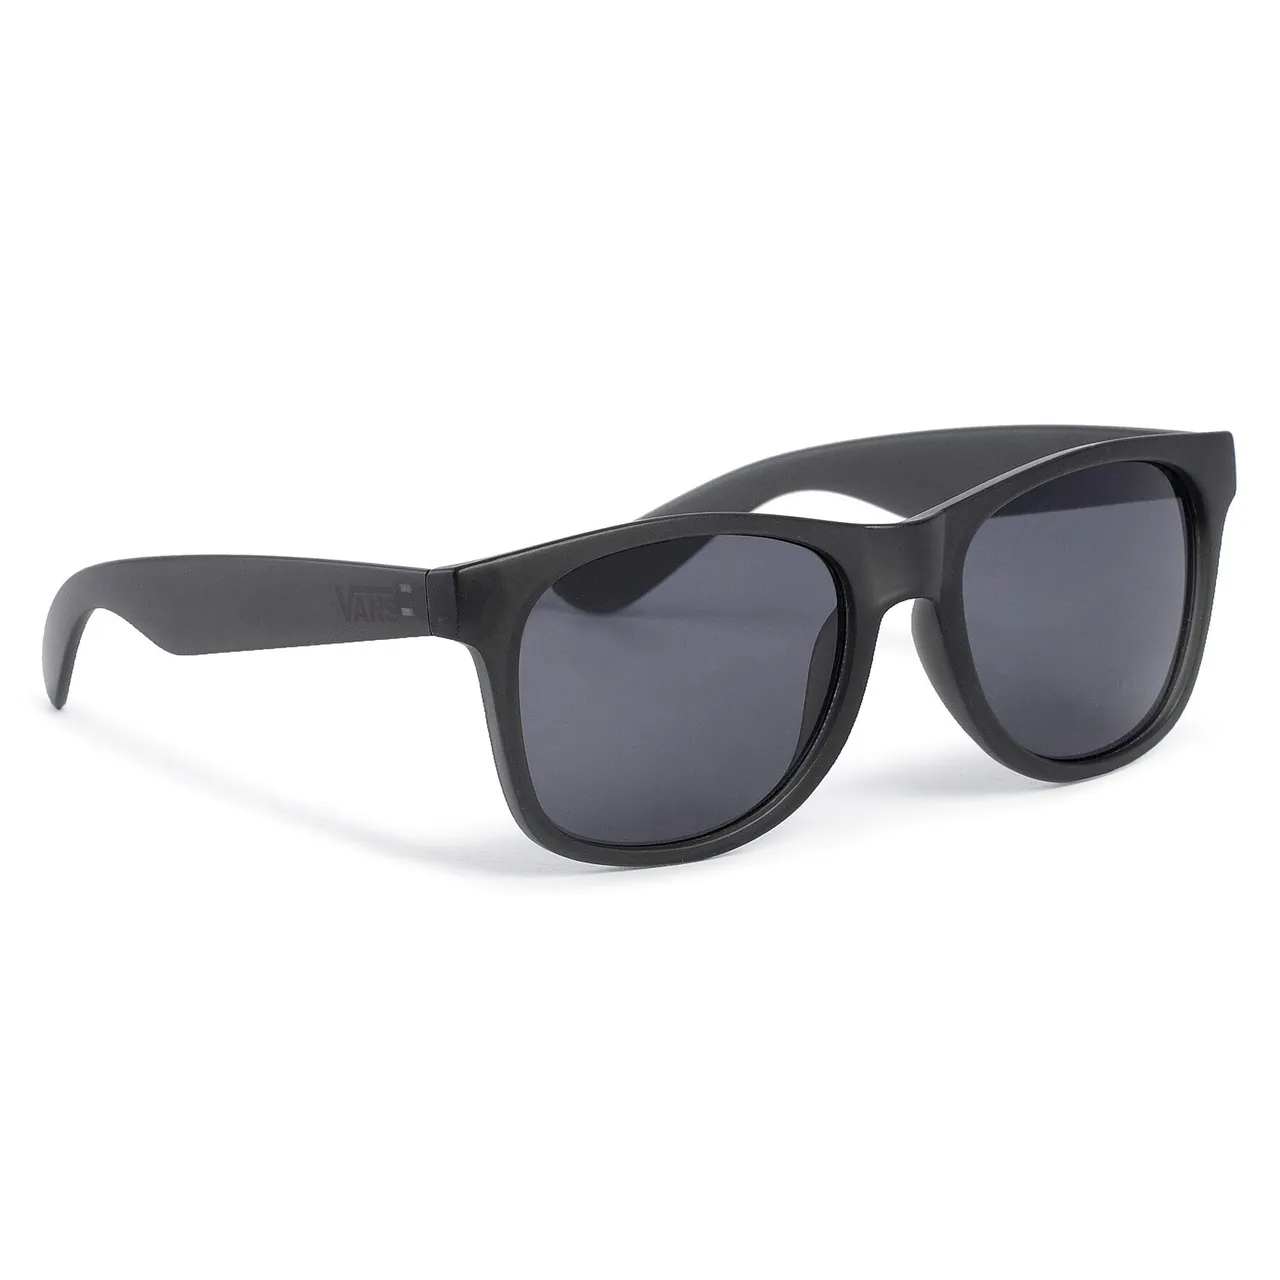 Sonnenbrillen Vans Spicoli 4 Shade VN000LC01S6 Black Frosed